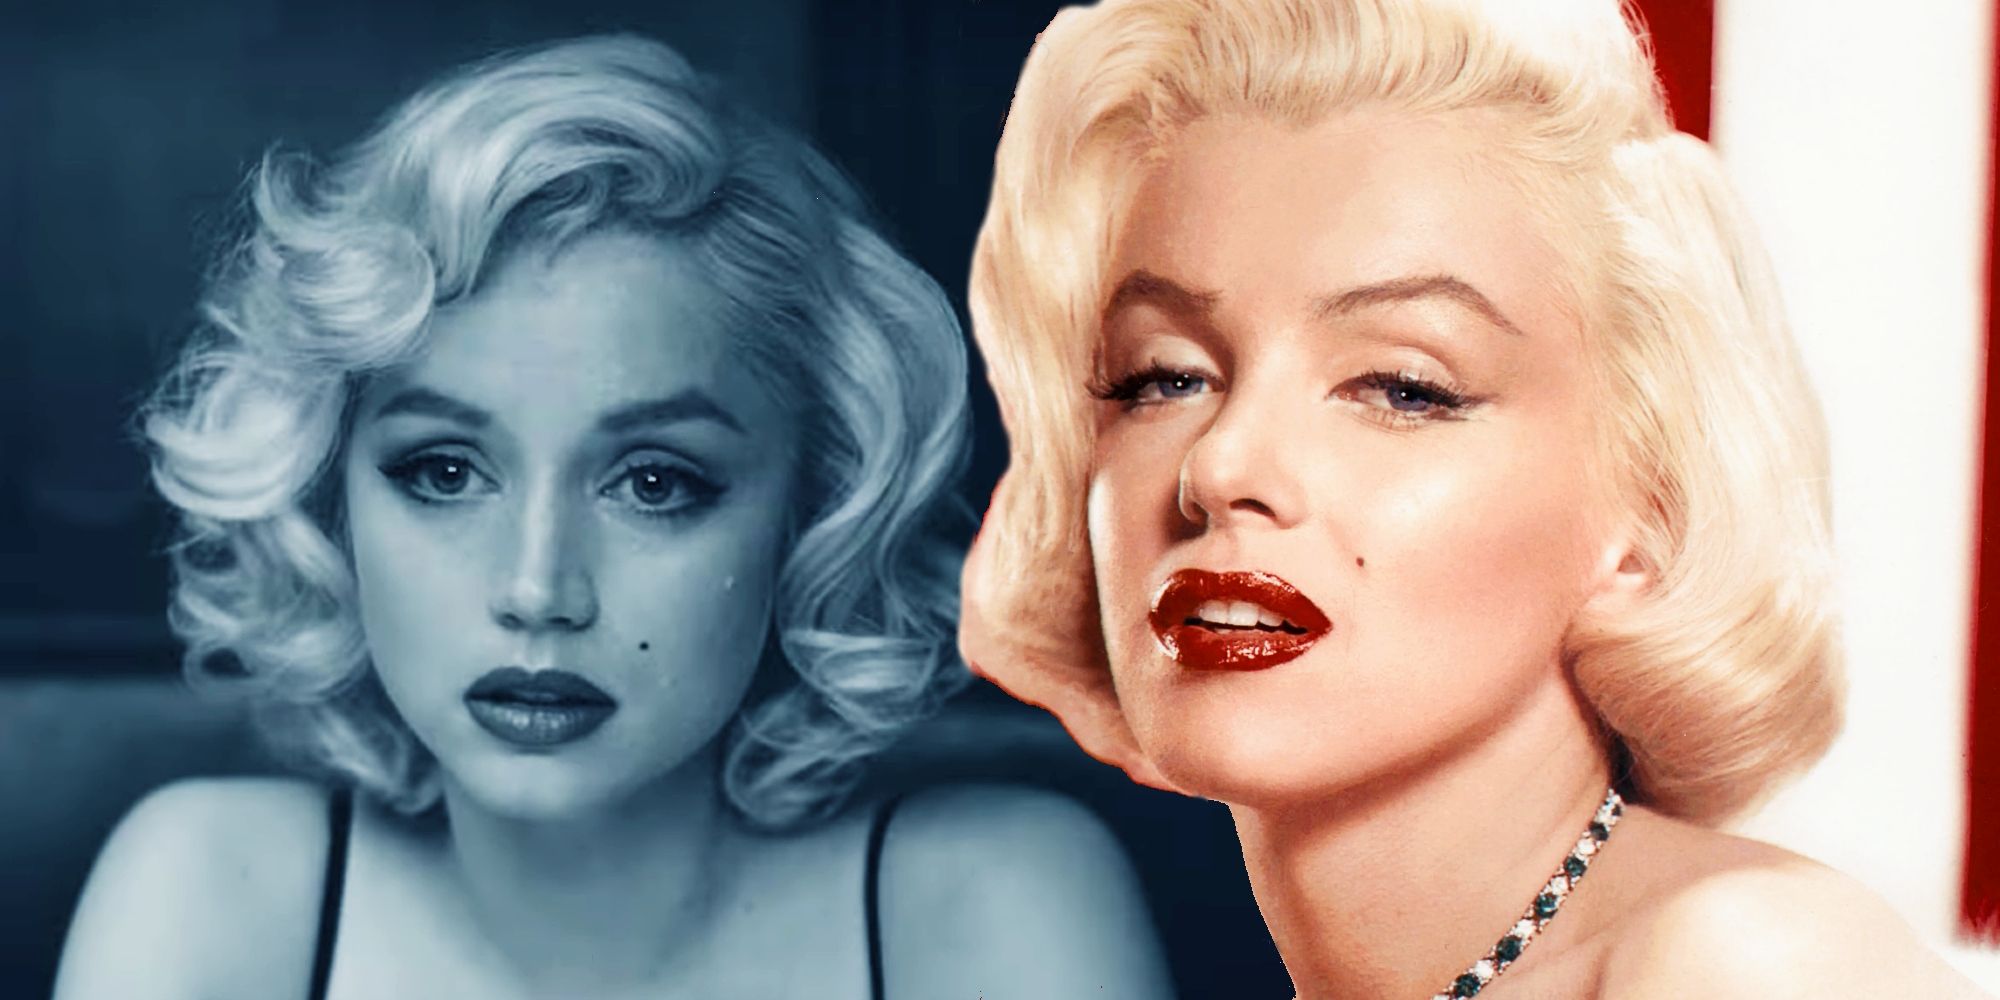 Ana de Armas is Marilyn Monroe in the new Netflix biopic